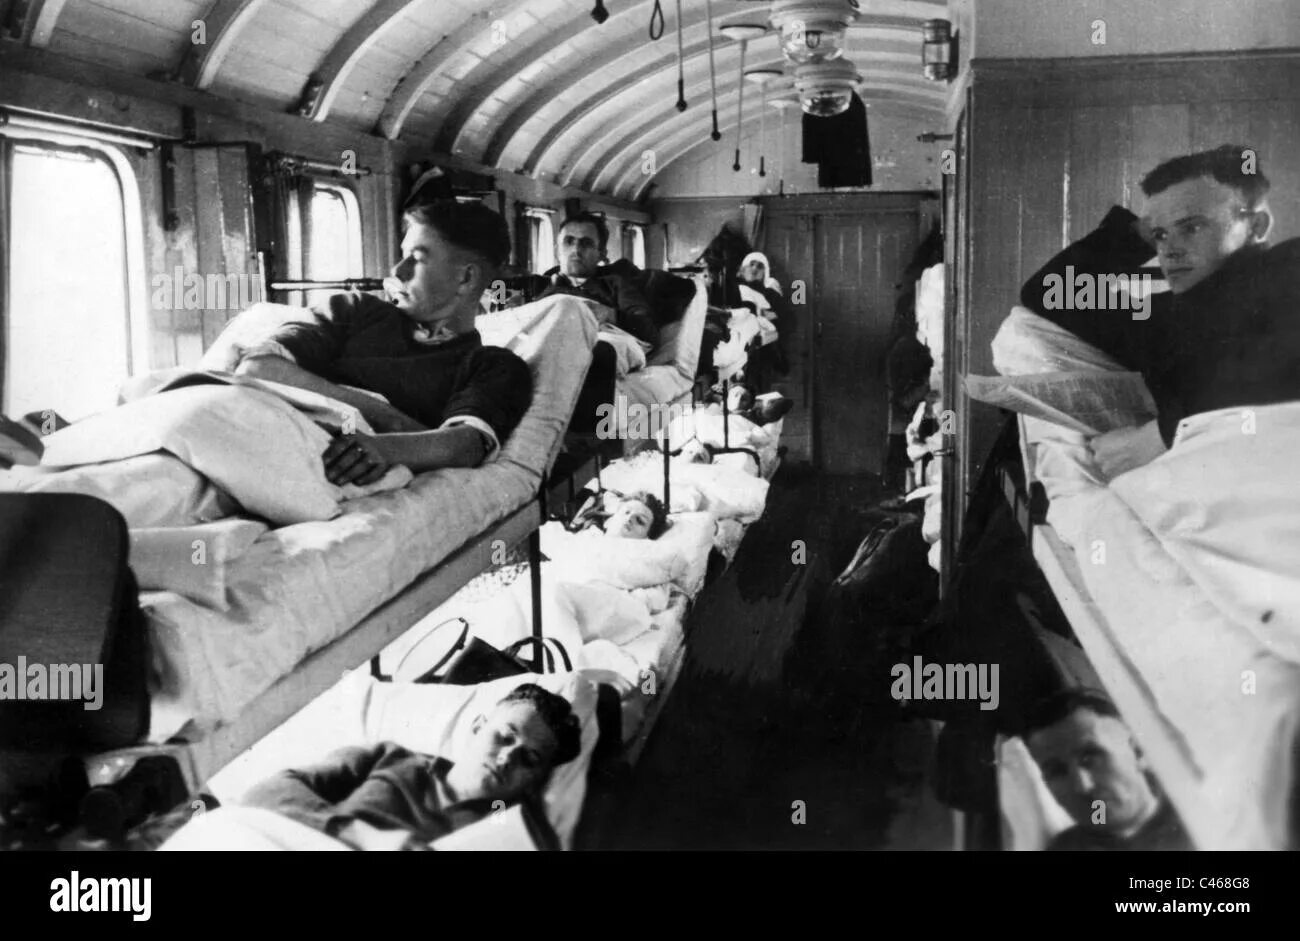 Поезд госпиталь. Санитарный вагон. Санитарные вагоны в войну. Санитарный поезд. Санитарный поезд второй мировой войны.